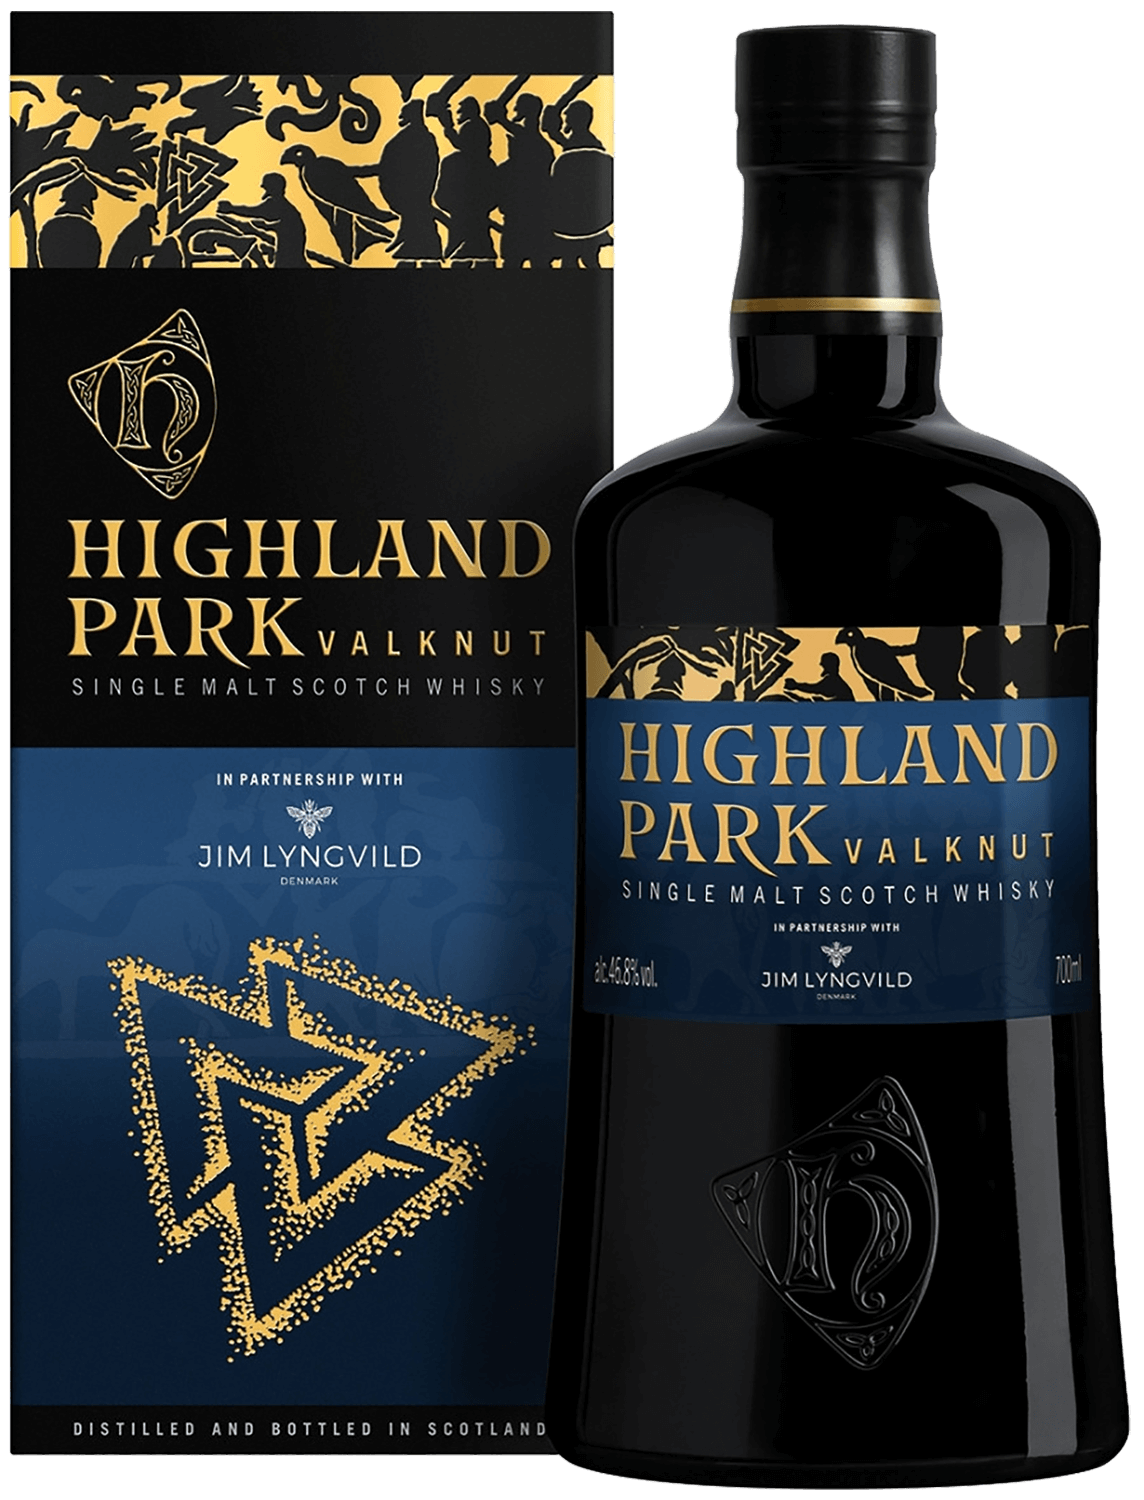 Highland Park Valknut Single Malt Scotch Whisky (gift box) highland park viking honour 12 y o single malt scotch whisky gift box